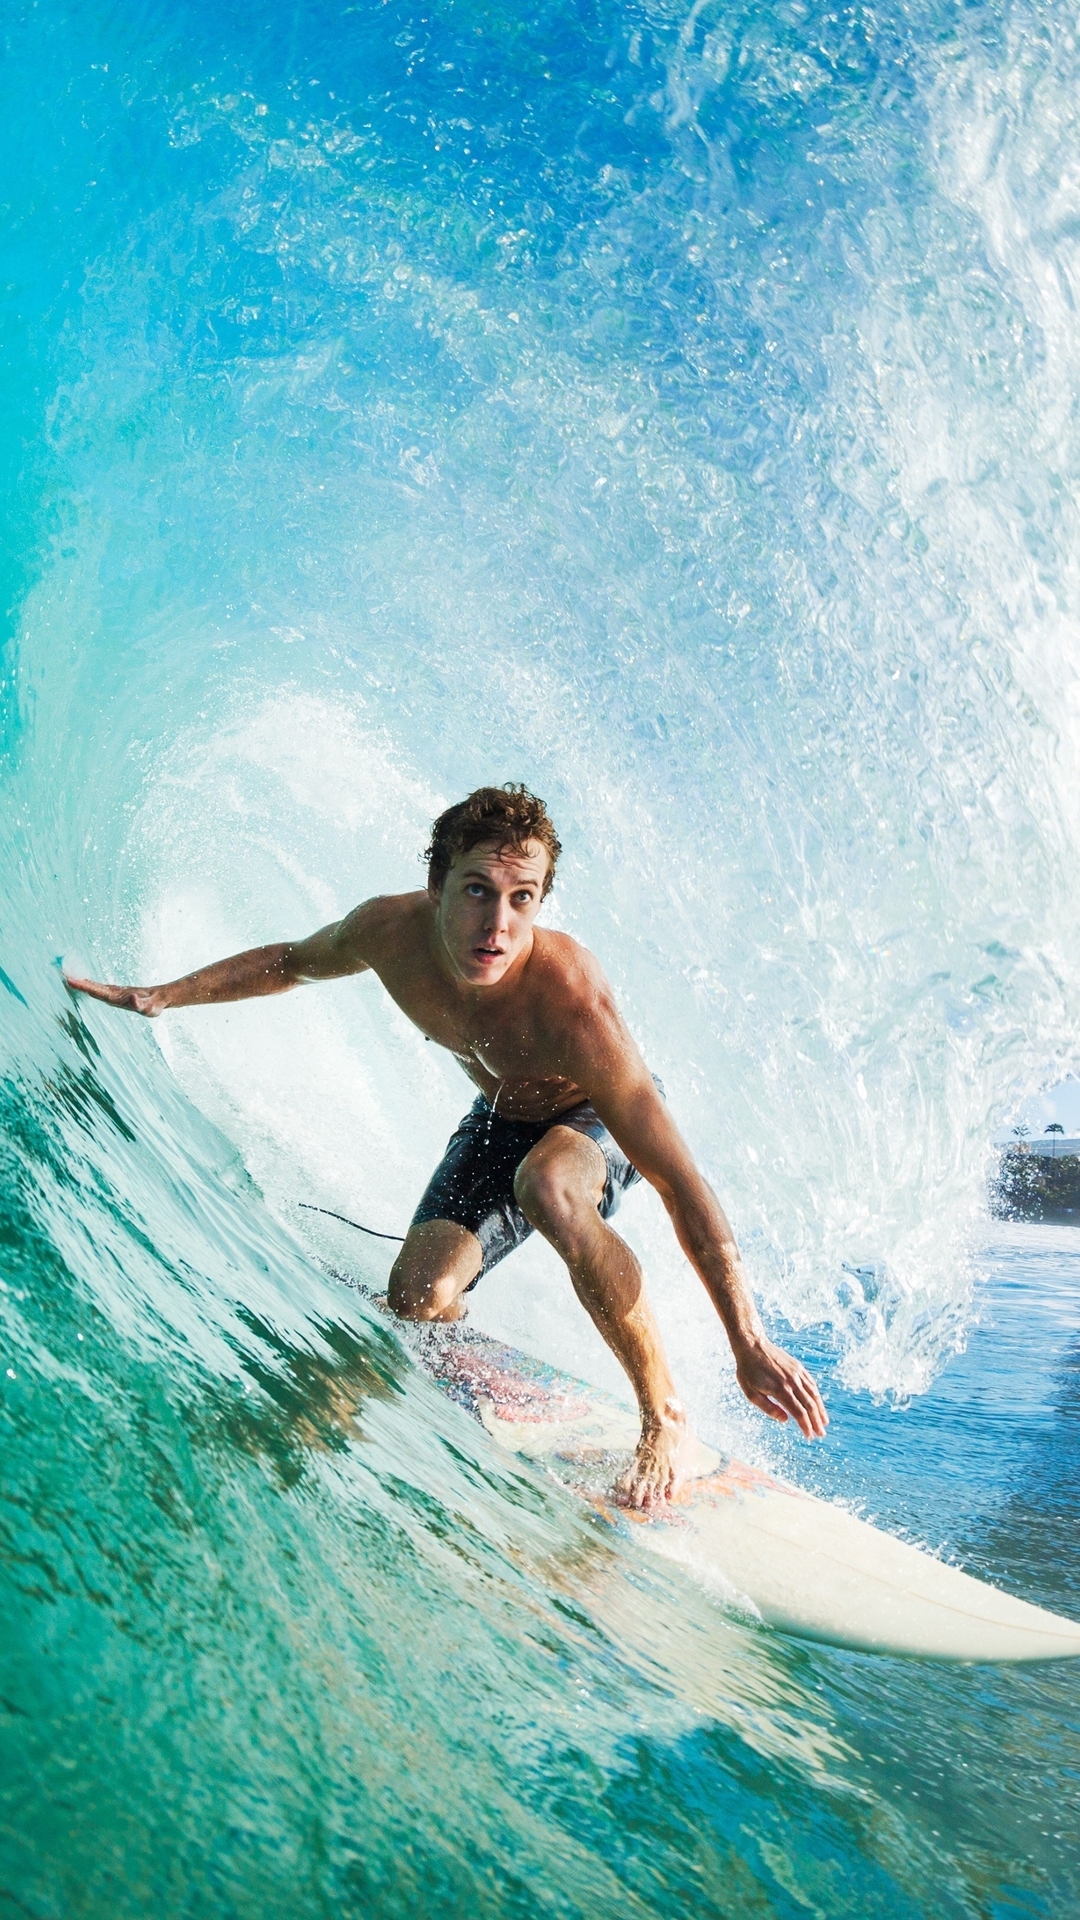 Image: Surfer, board, wave, beach, buildings, water, male